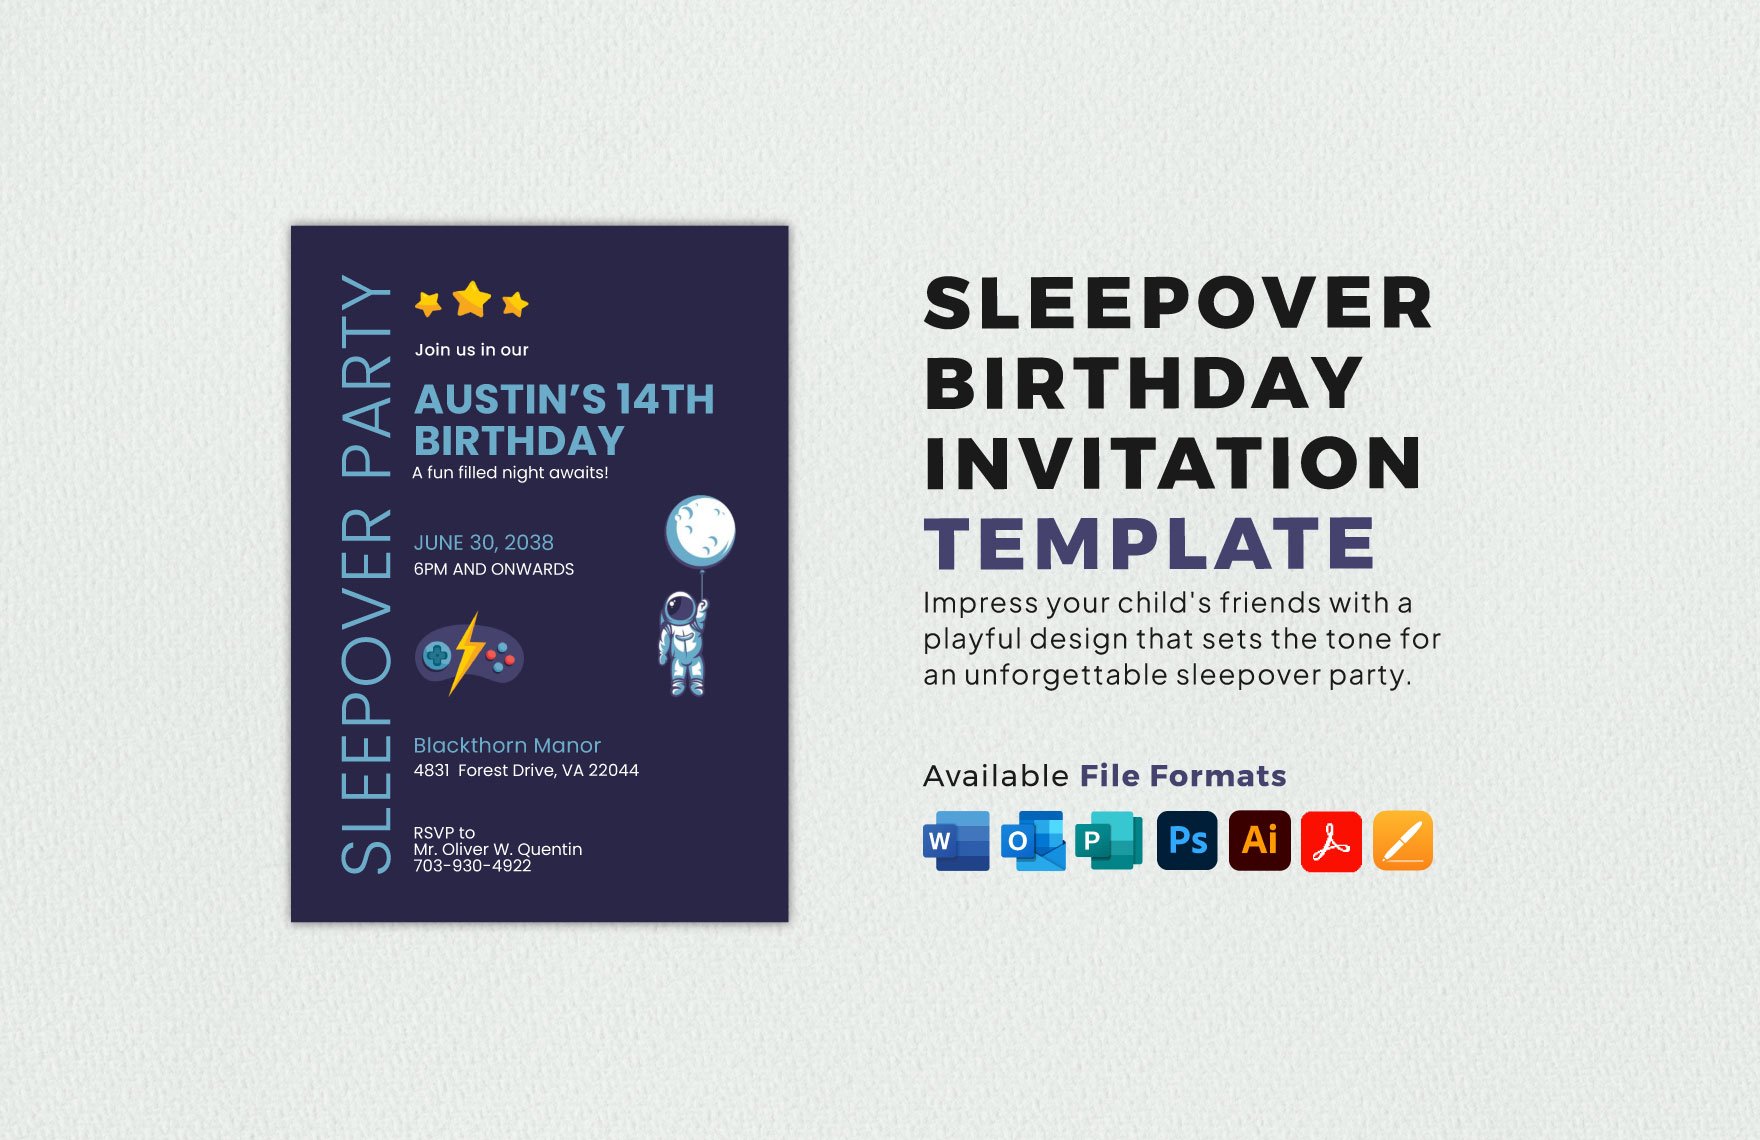 Sleepover Birthday Invitation Template